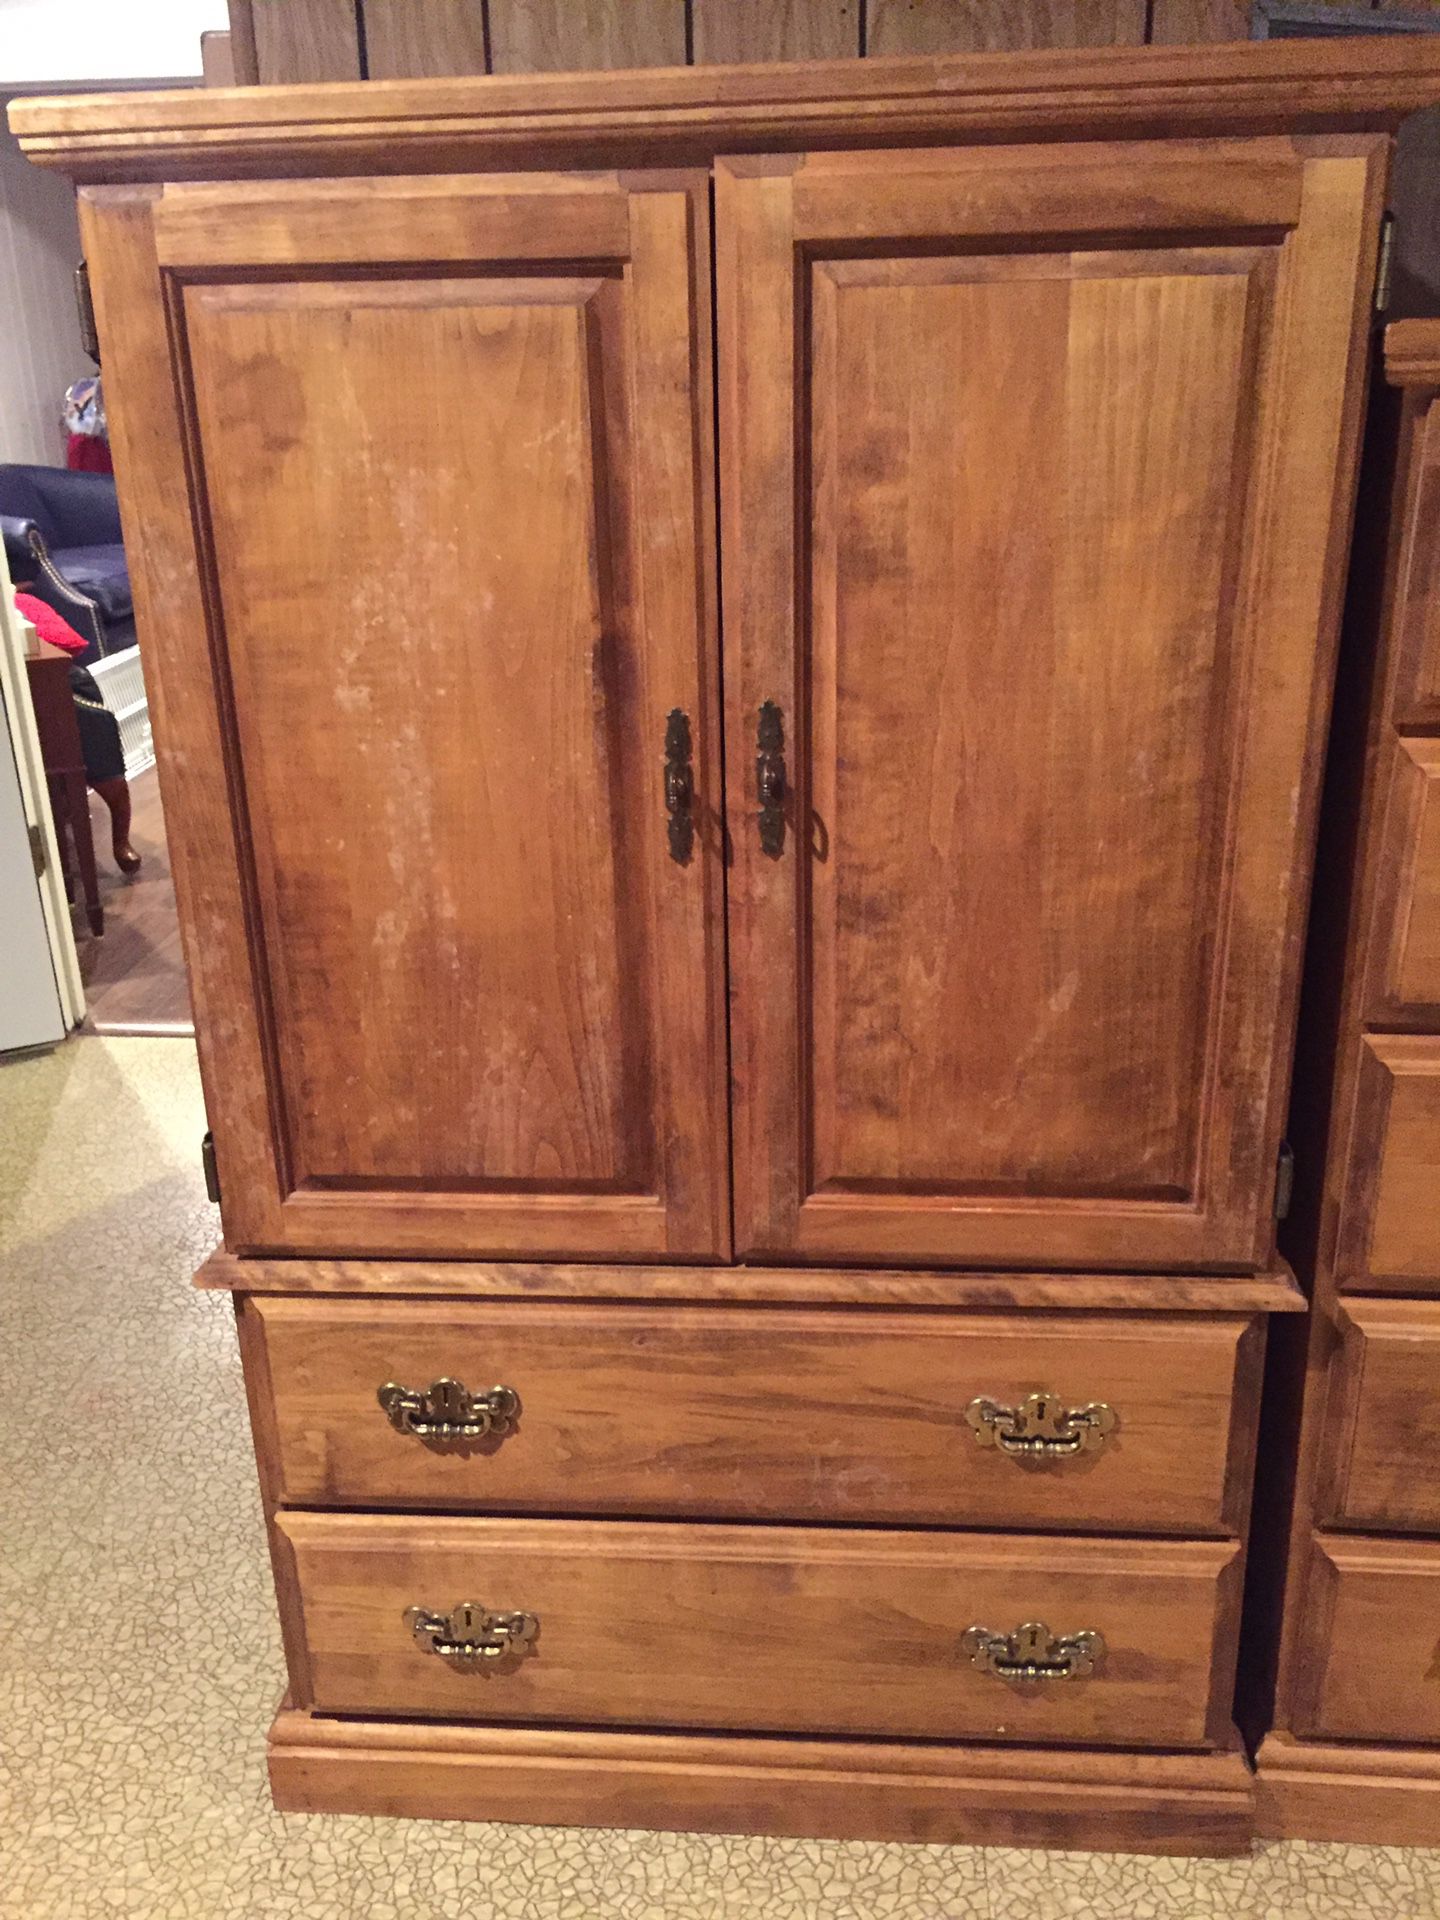 Pine armoire (6 drawer tall dresser)